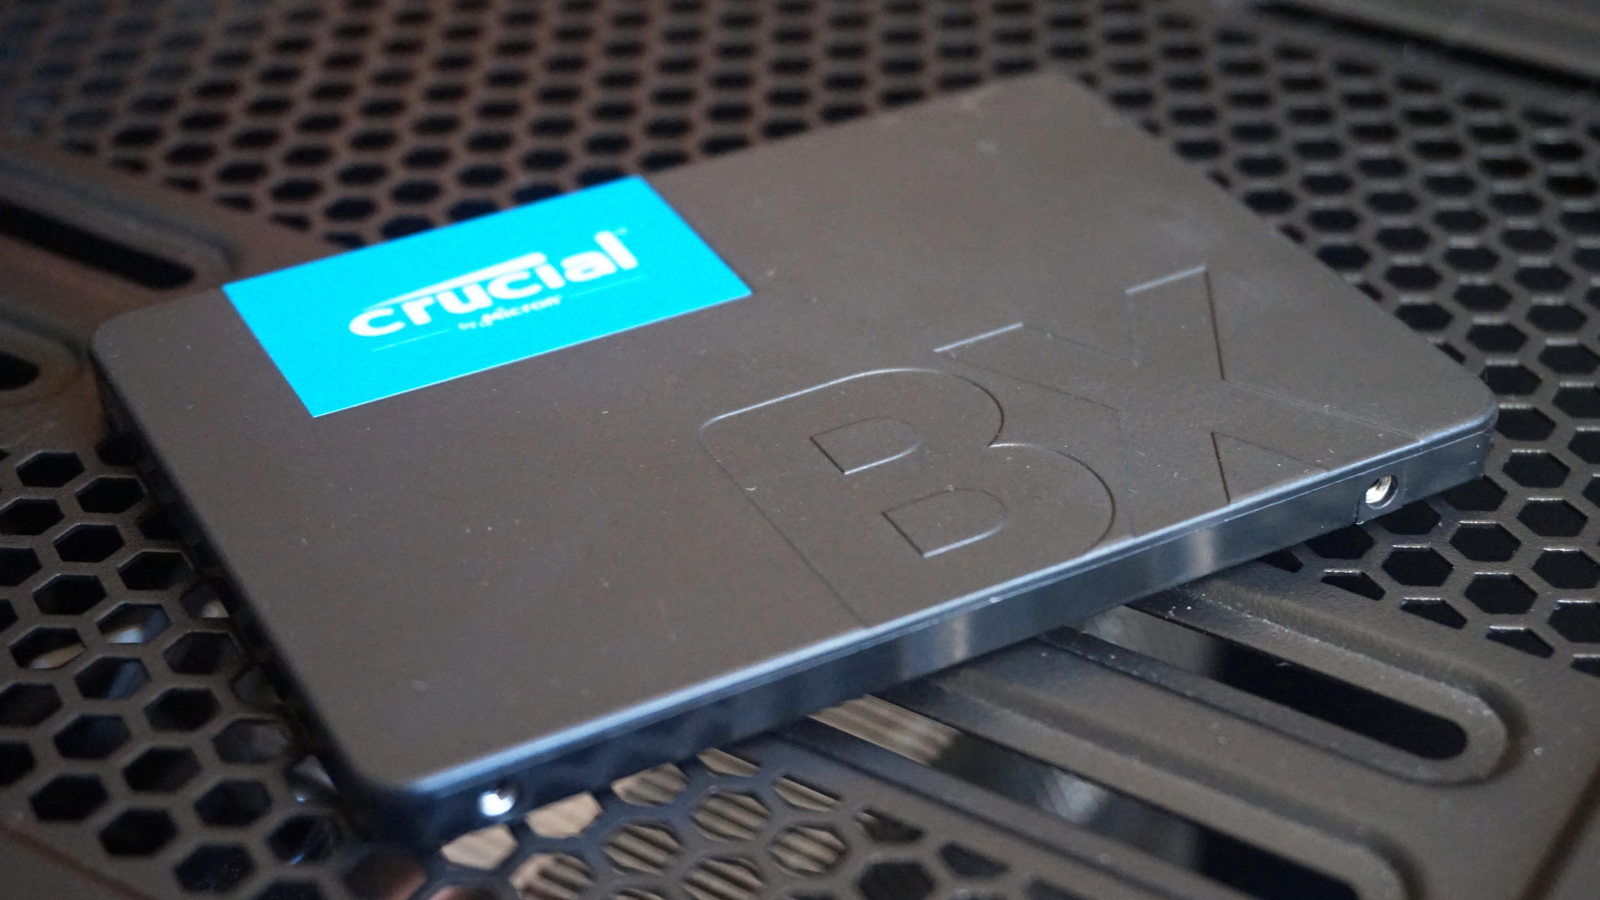 Crucial BX500 SSD